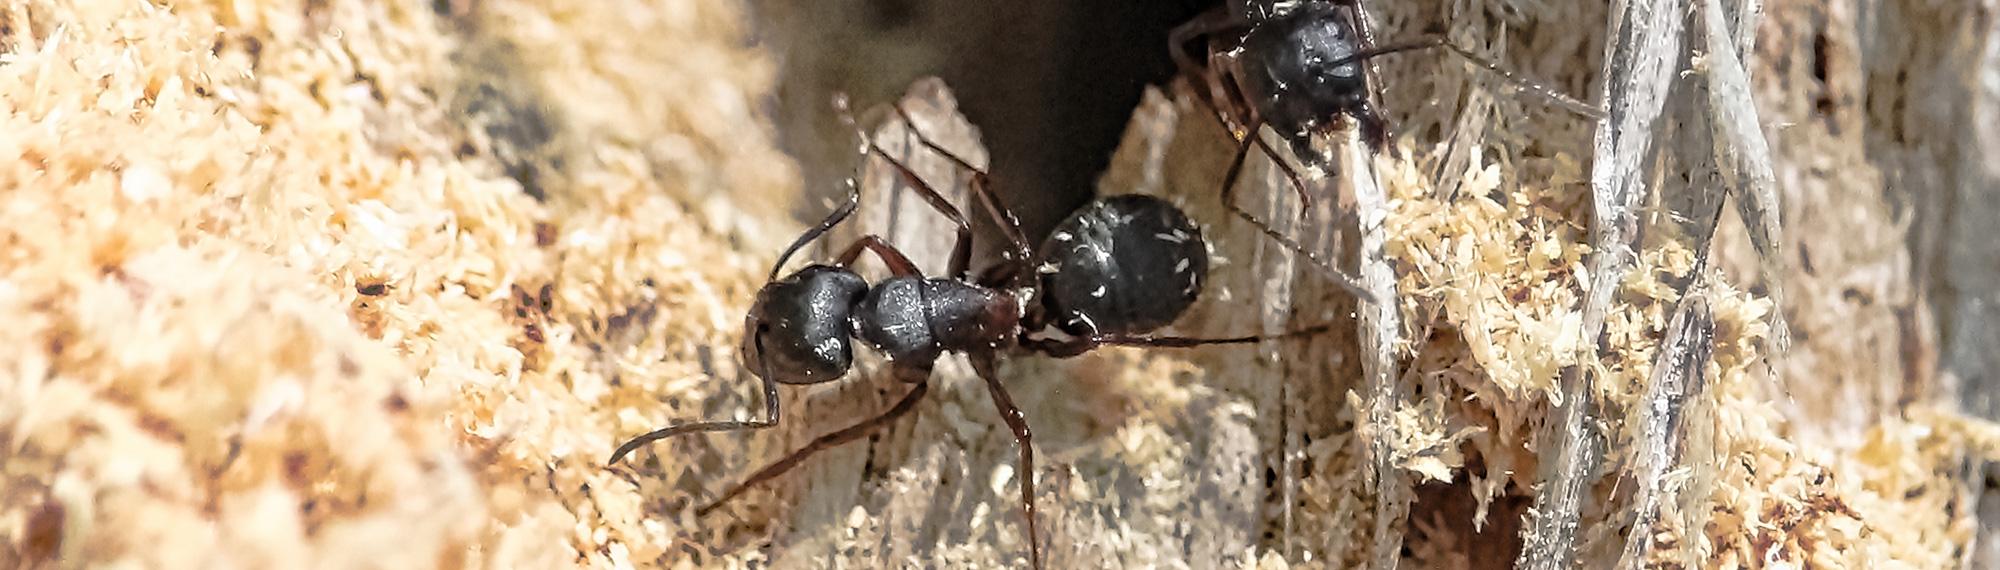 large black ants damaging wood